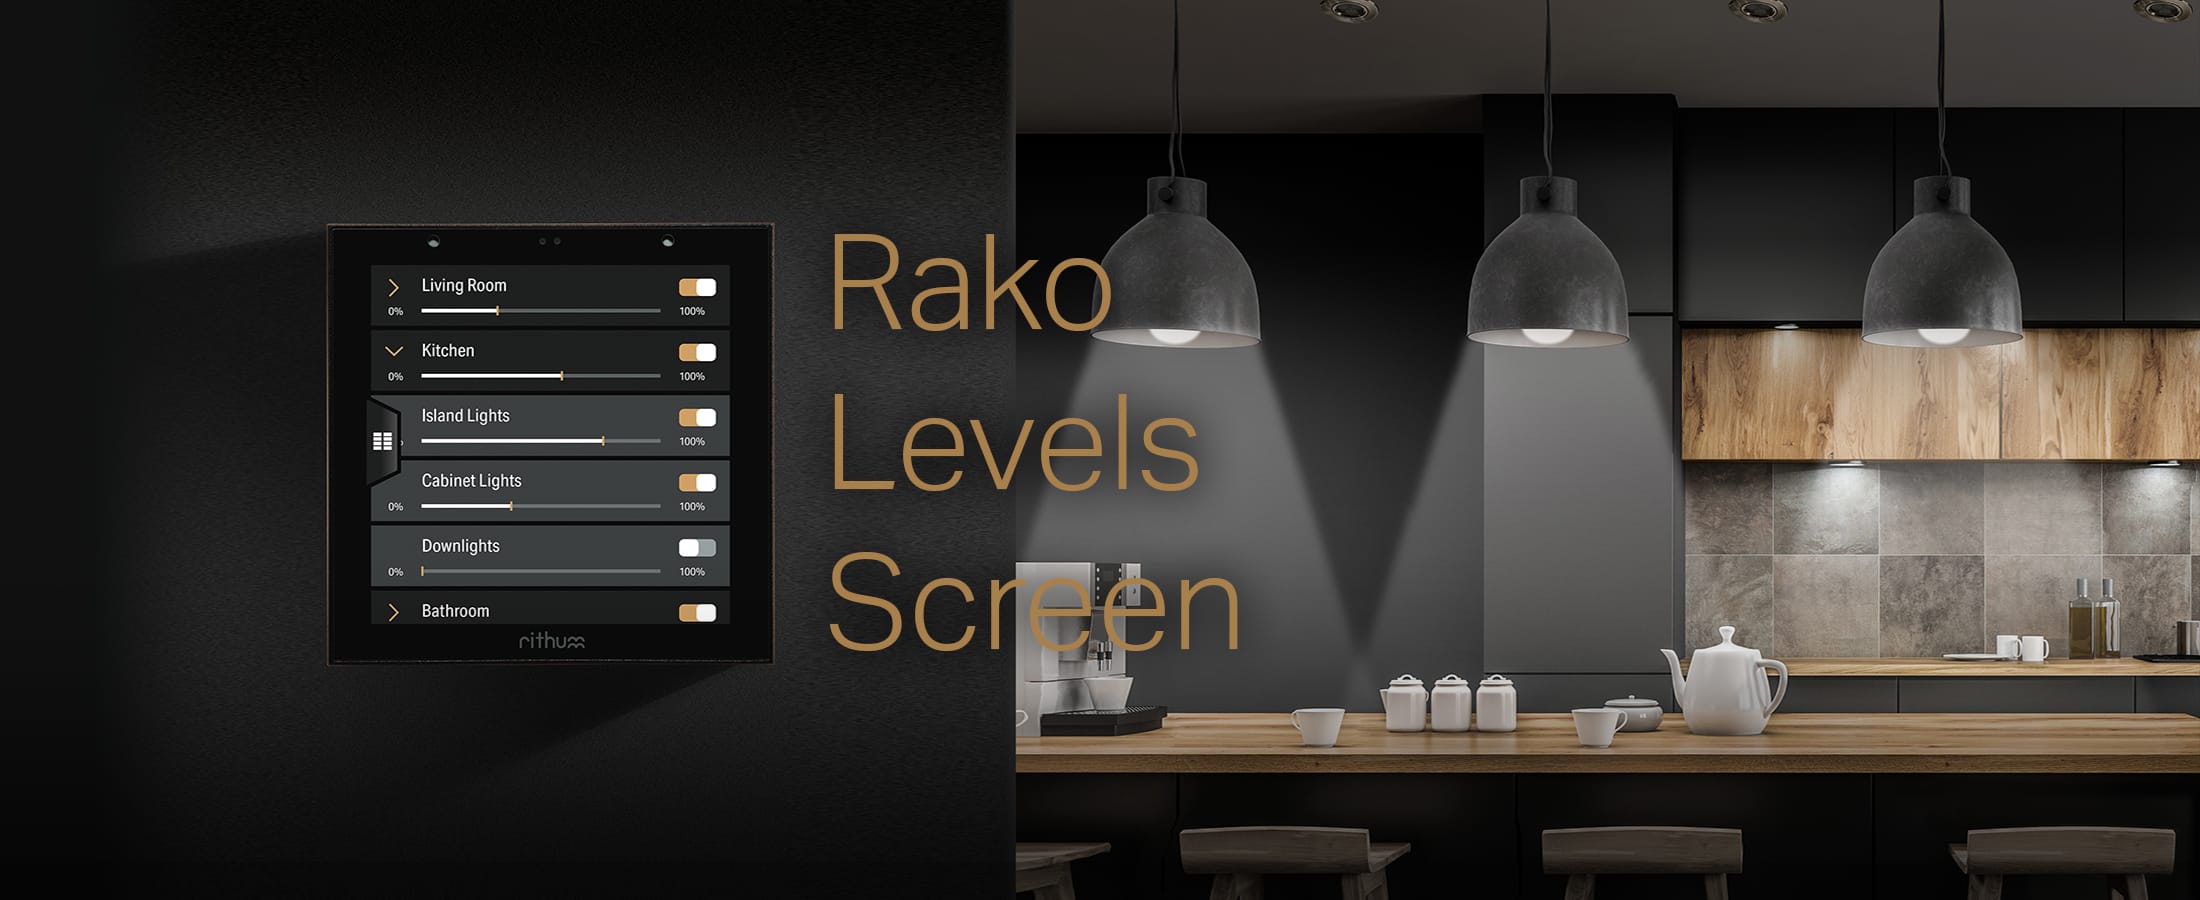 Rako Levels Screen